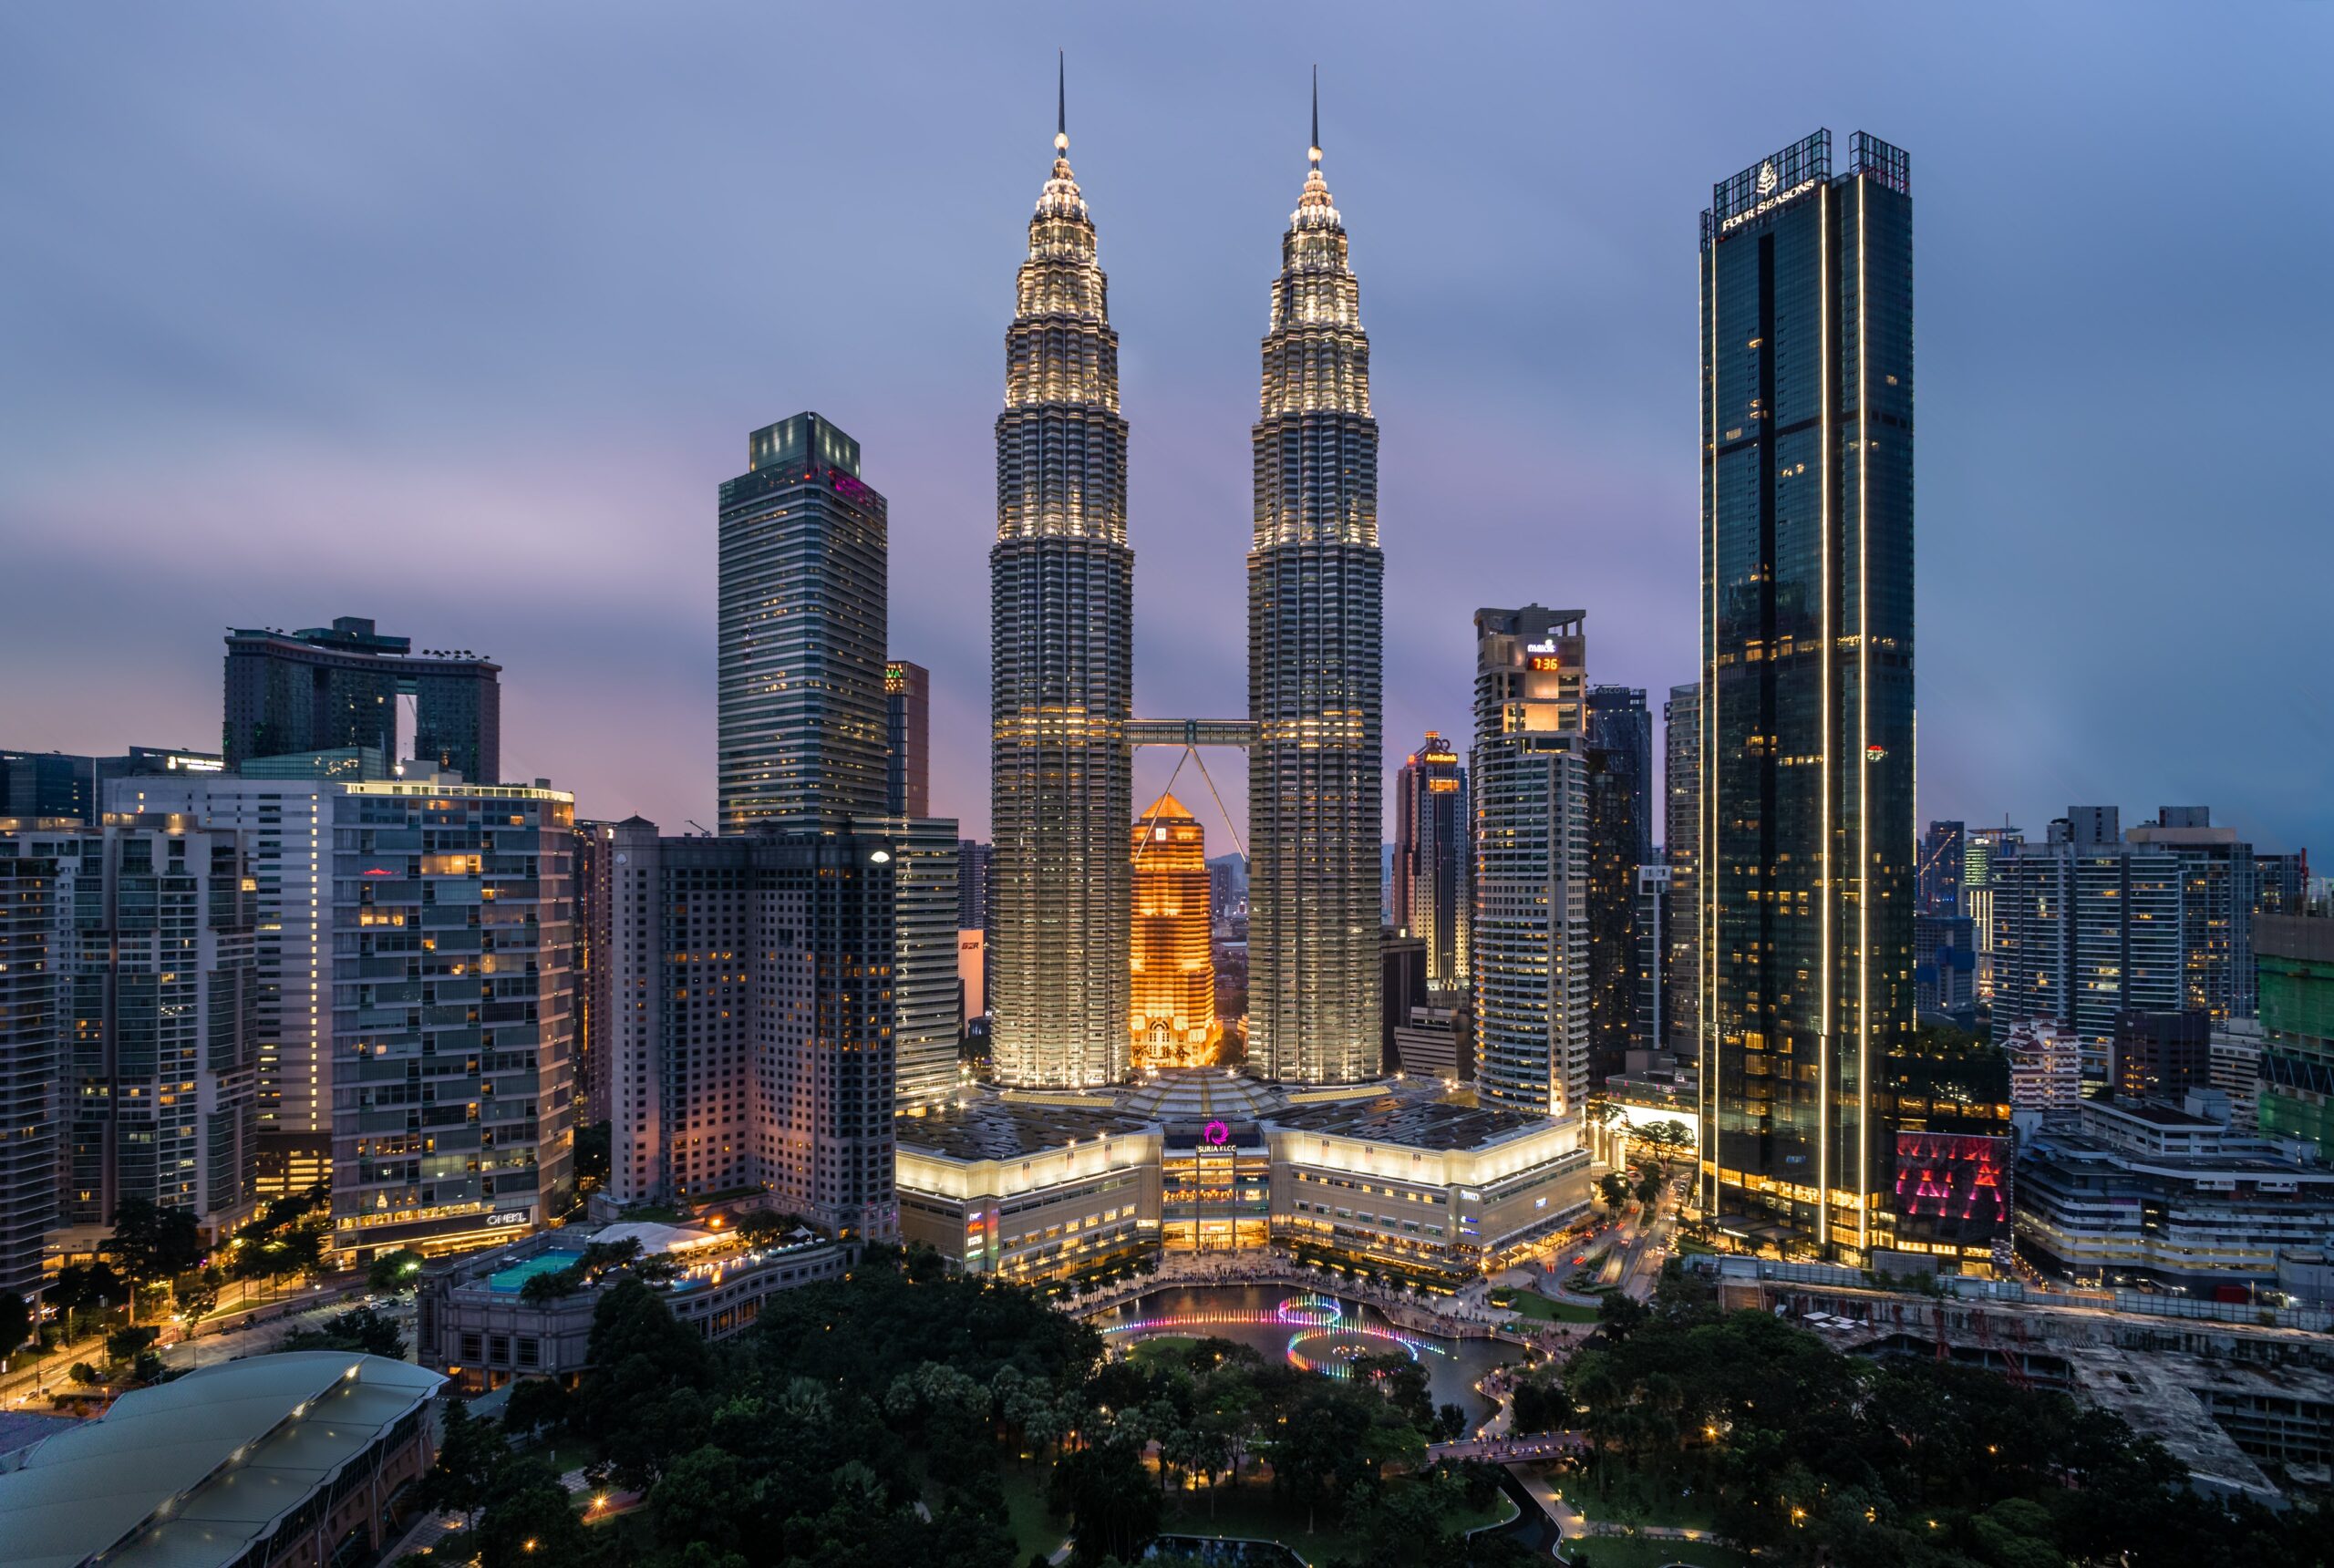 Nightview of the Petronas Towers in Kuala Lumpur